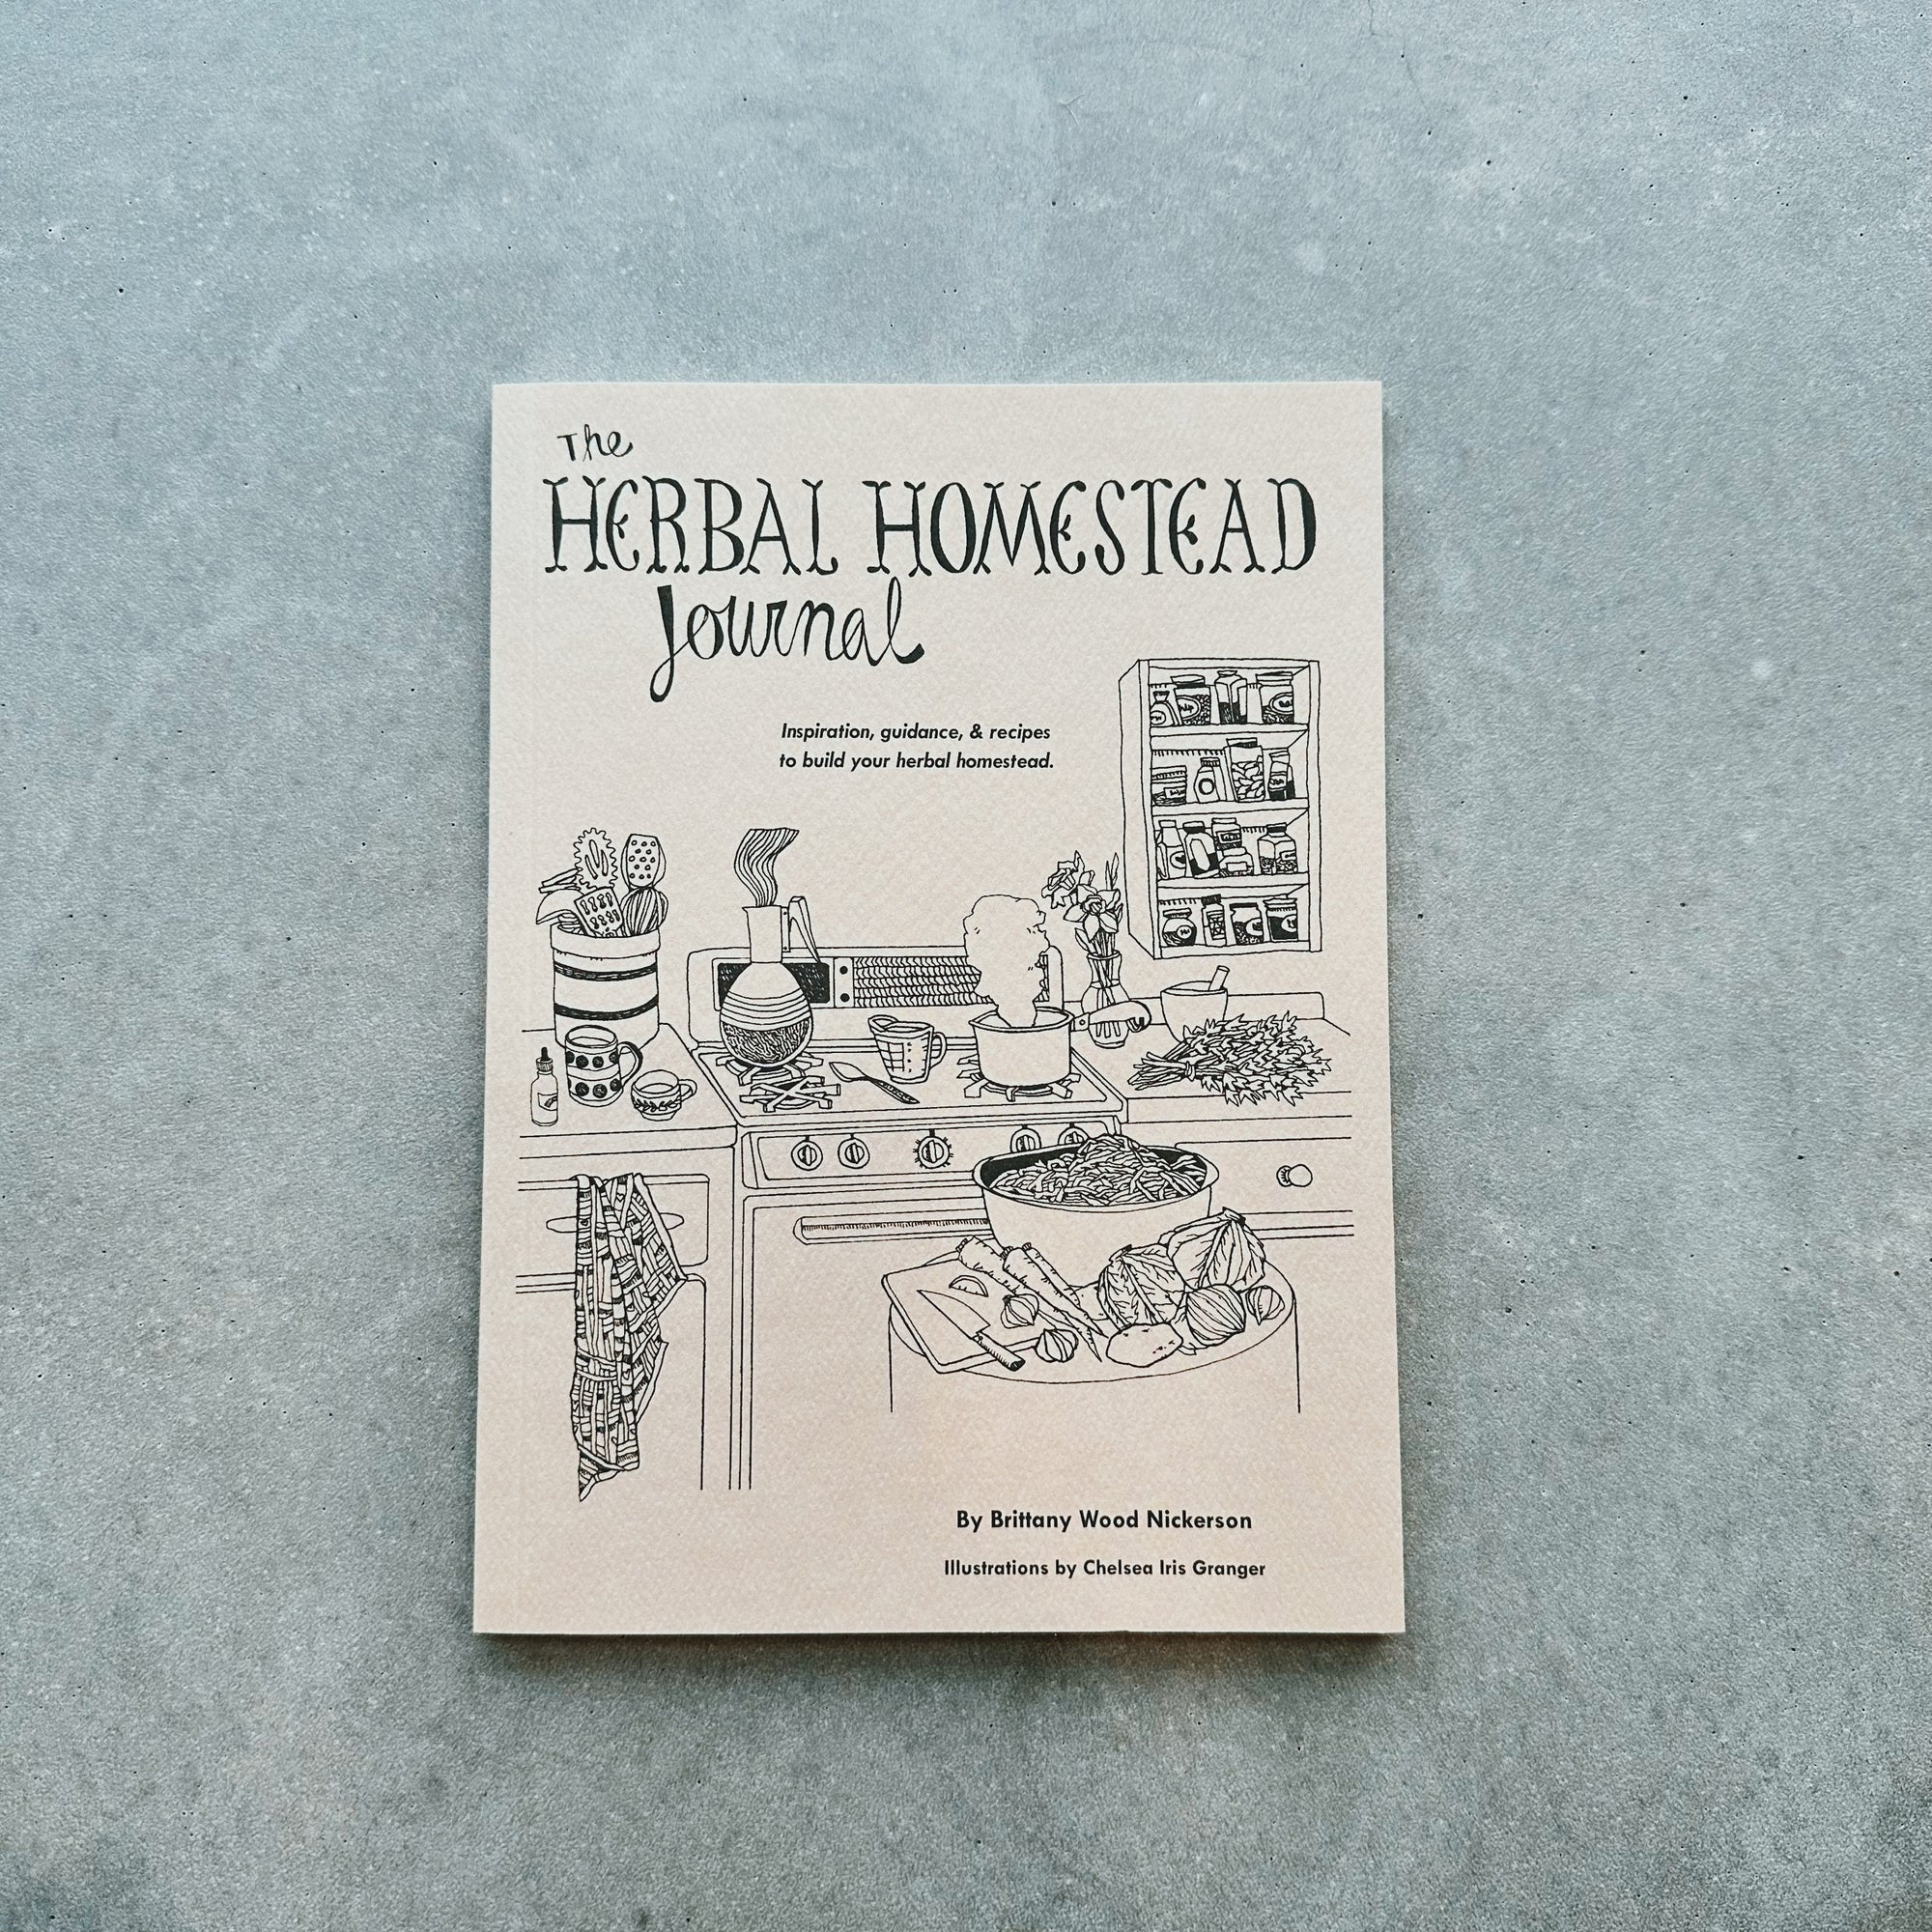 The herbal homestead journal